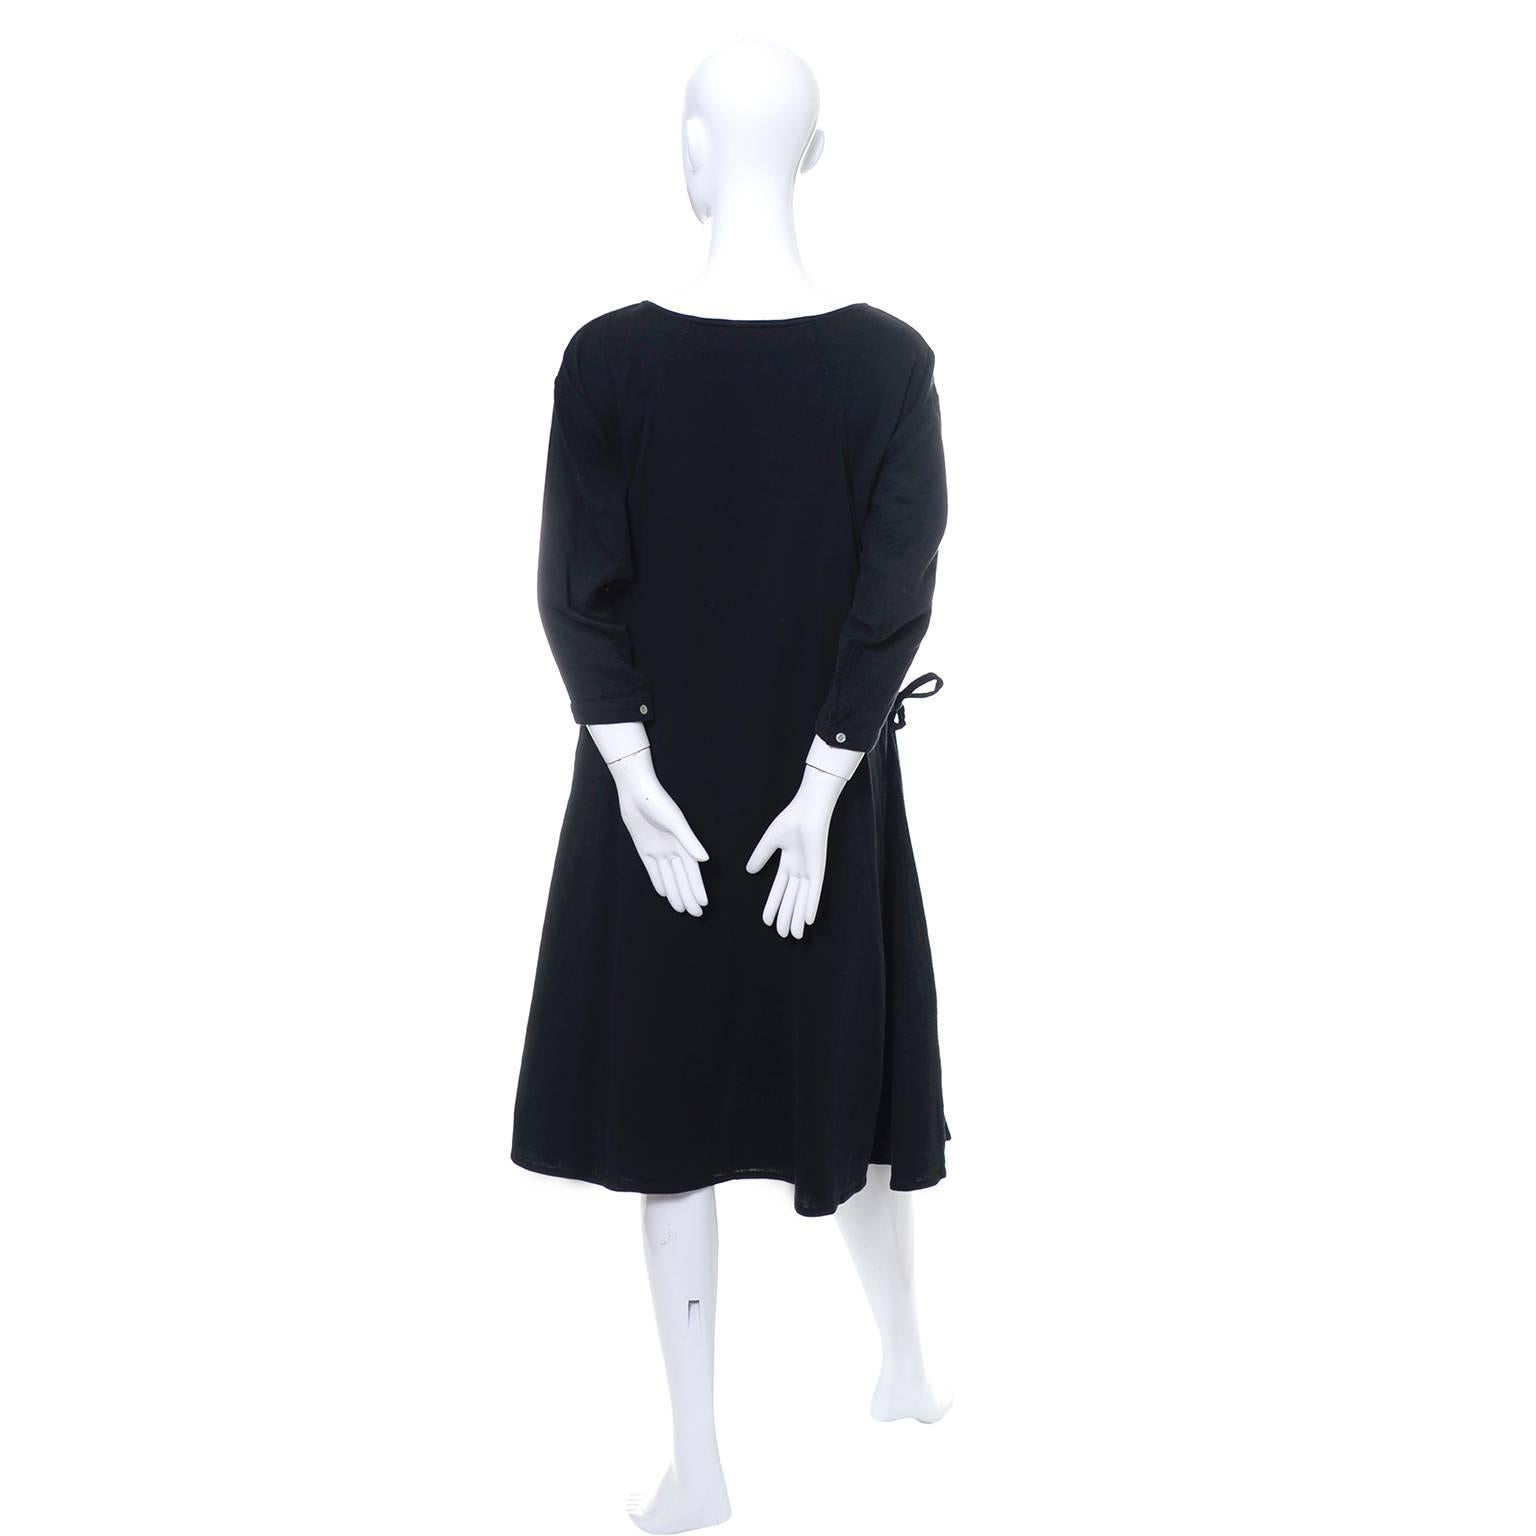 Women's Issey Miyake Sport 1980s Cotton Dress or Tunic Made in Japan Minimalist Chic